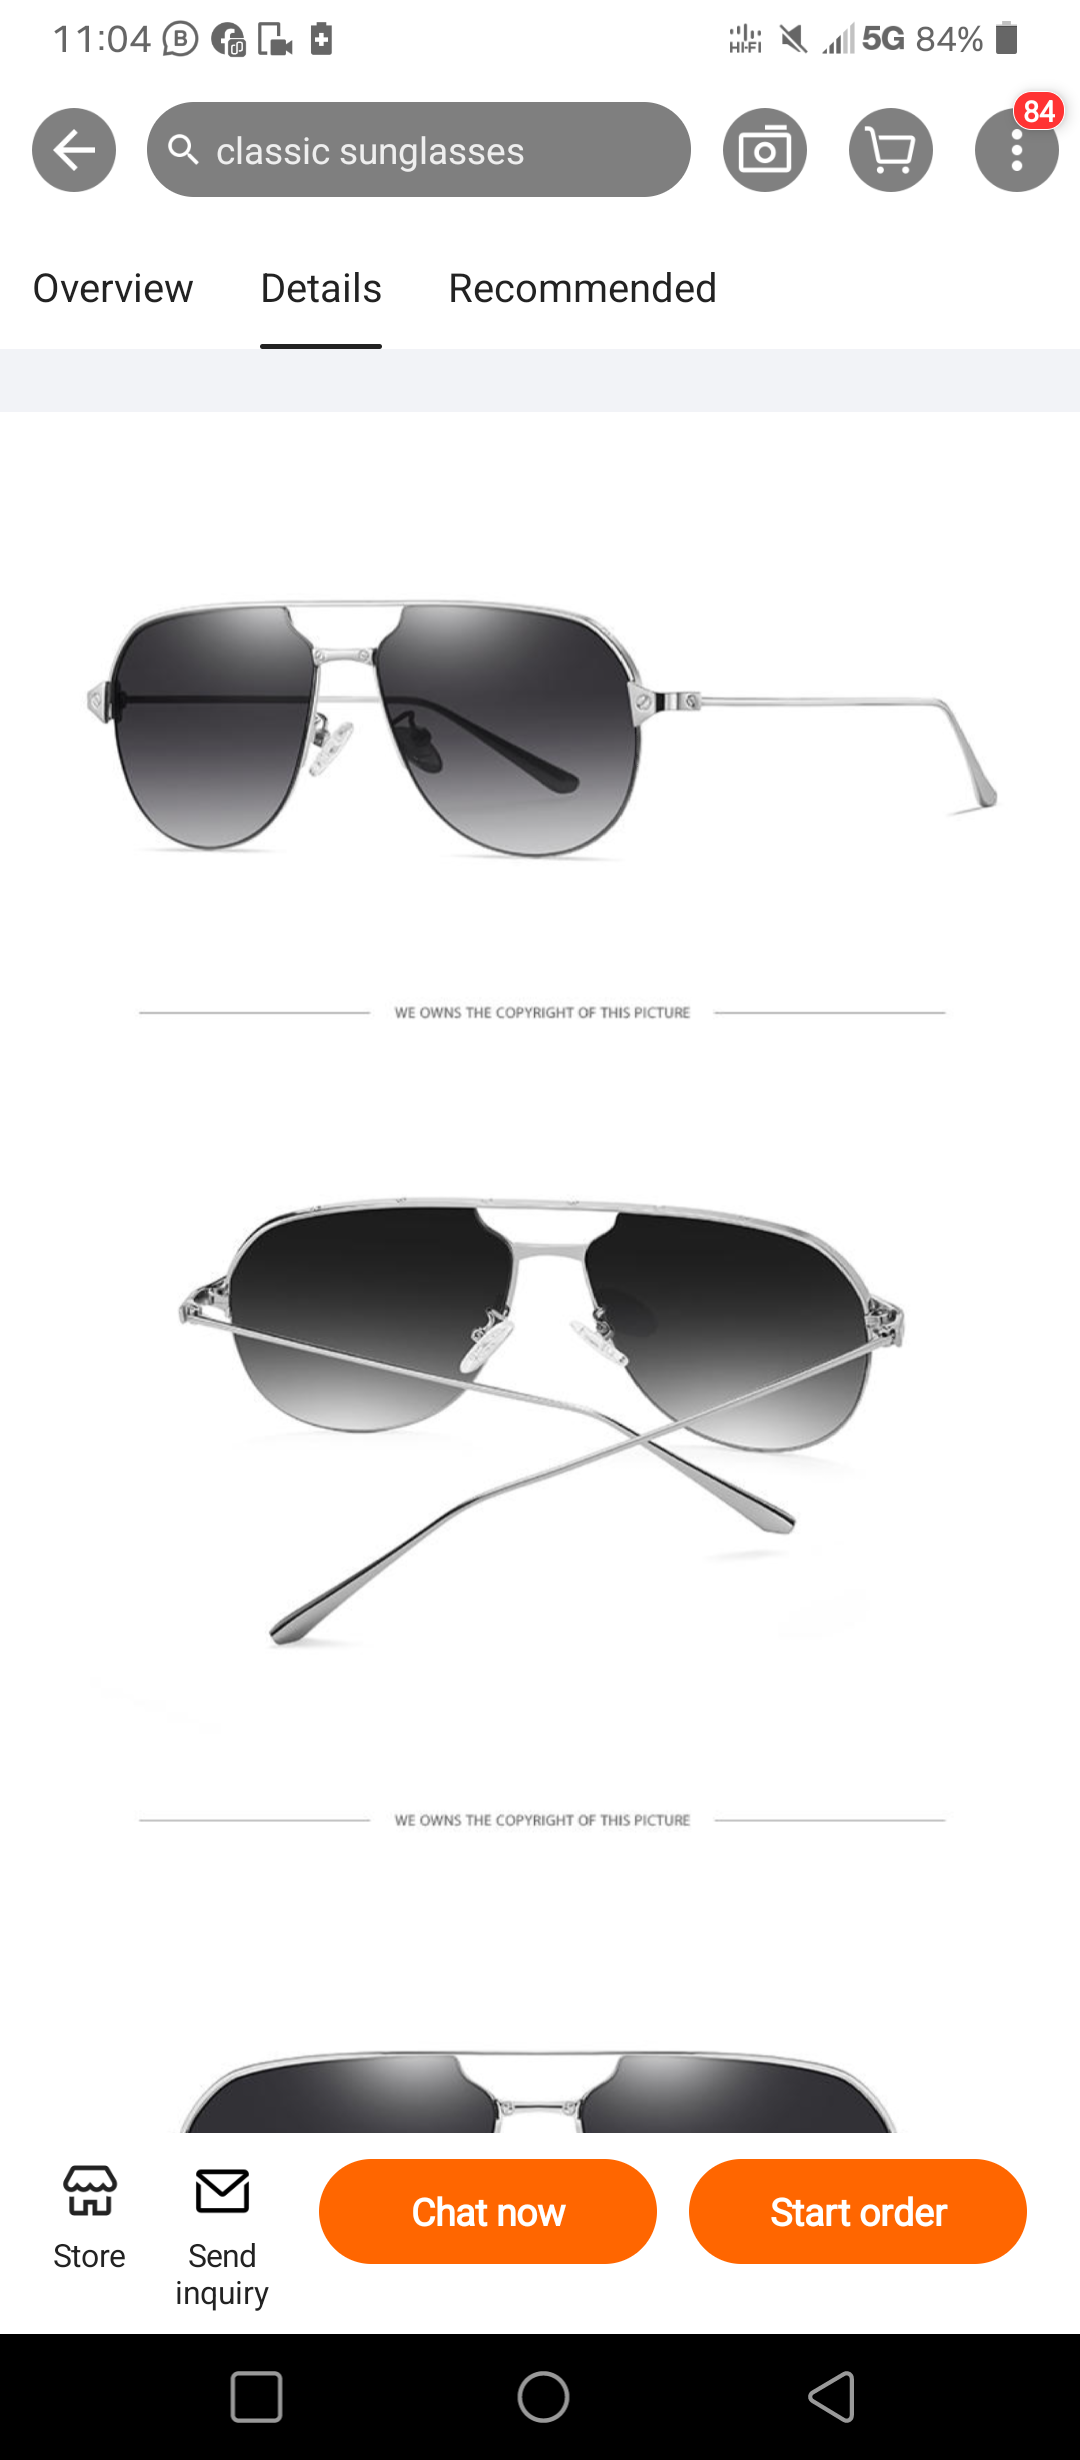 Don John Sunglasses & Prescription Glasses 79 Styles Unisex